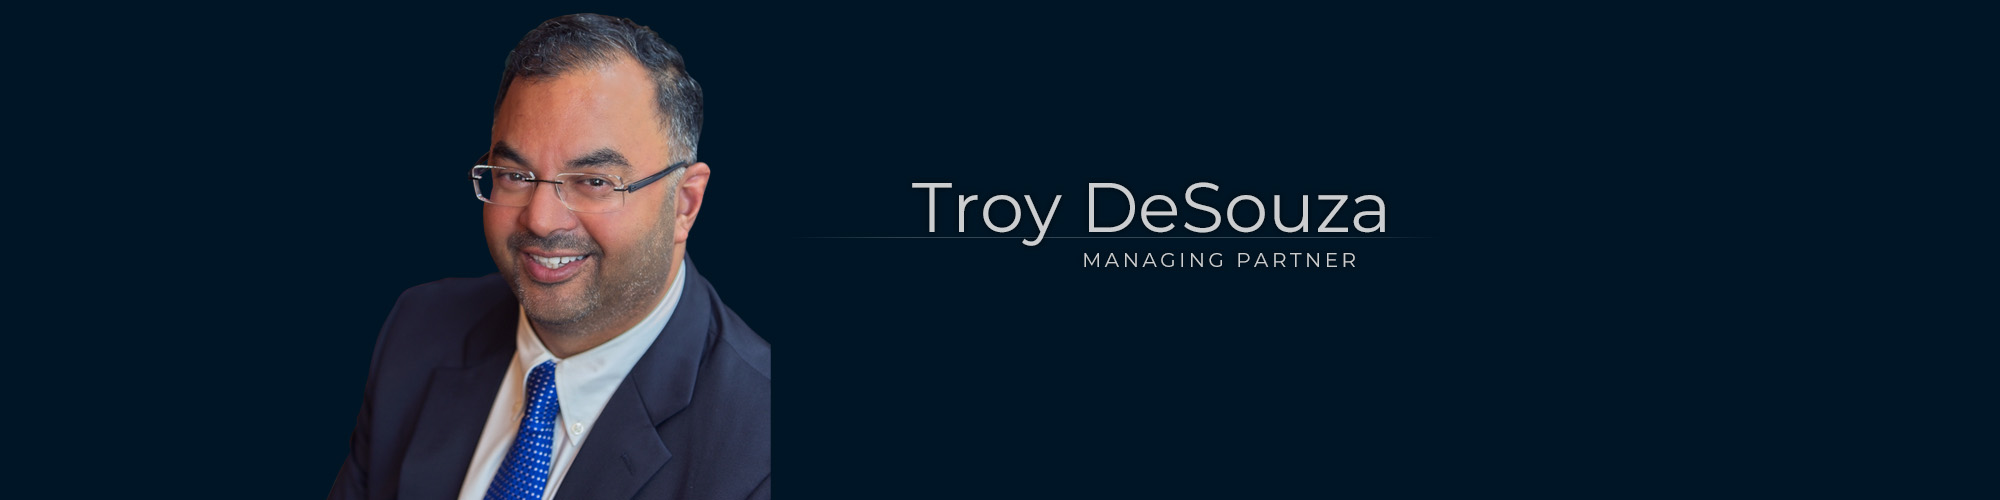 Troy DeSouza – Managing Partner at Dominion GovLaw LLP